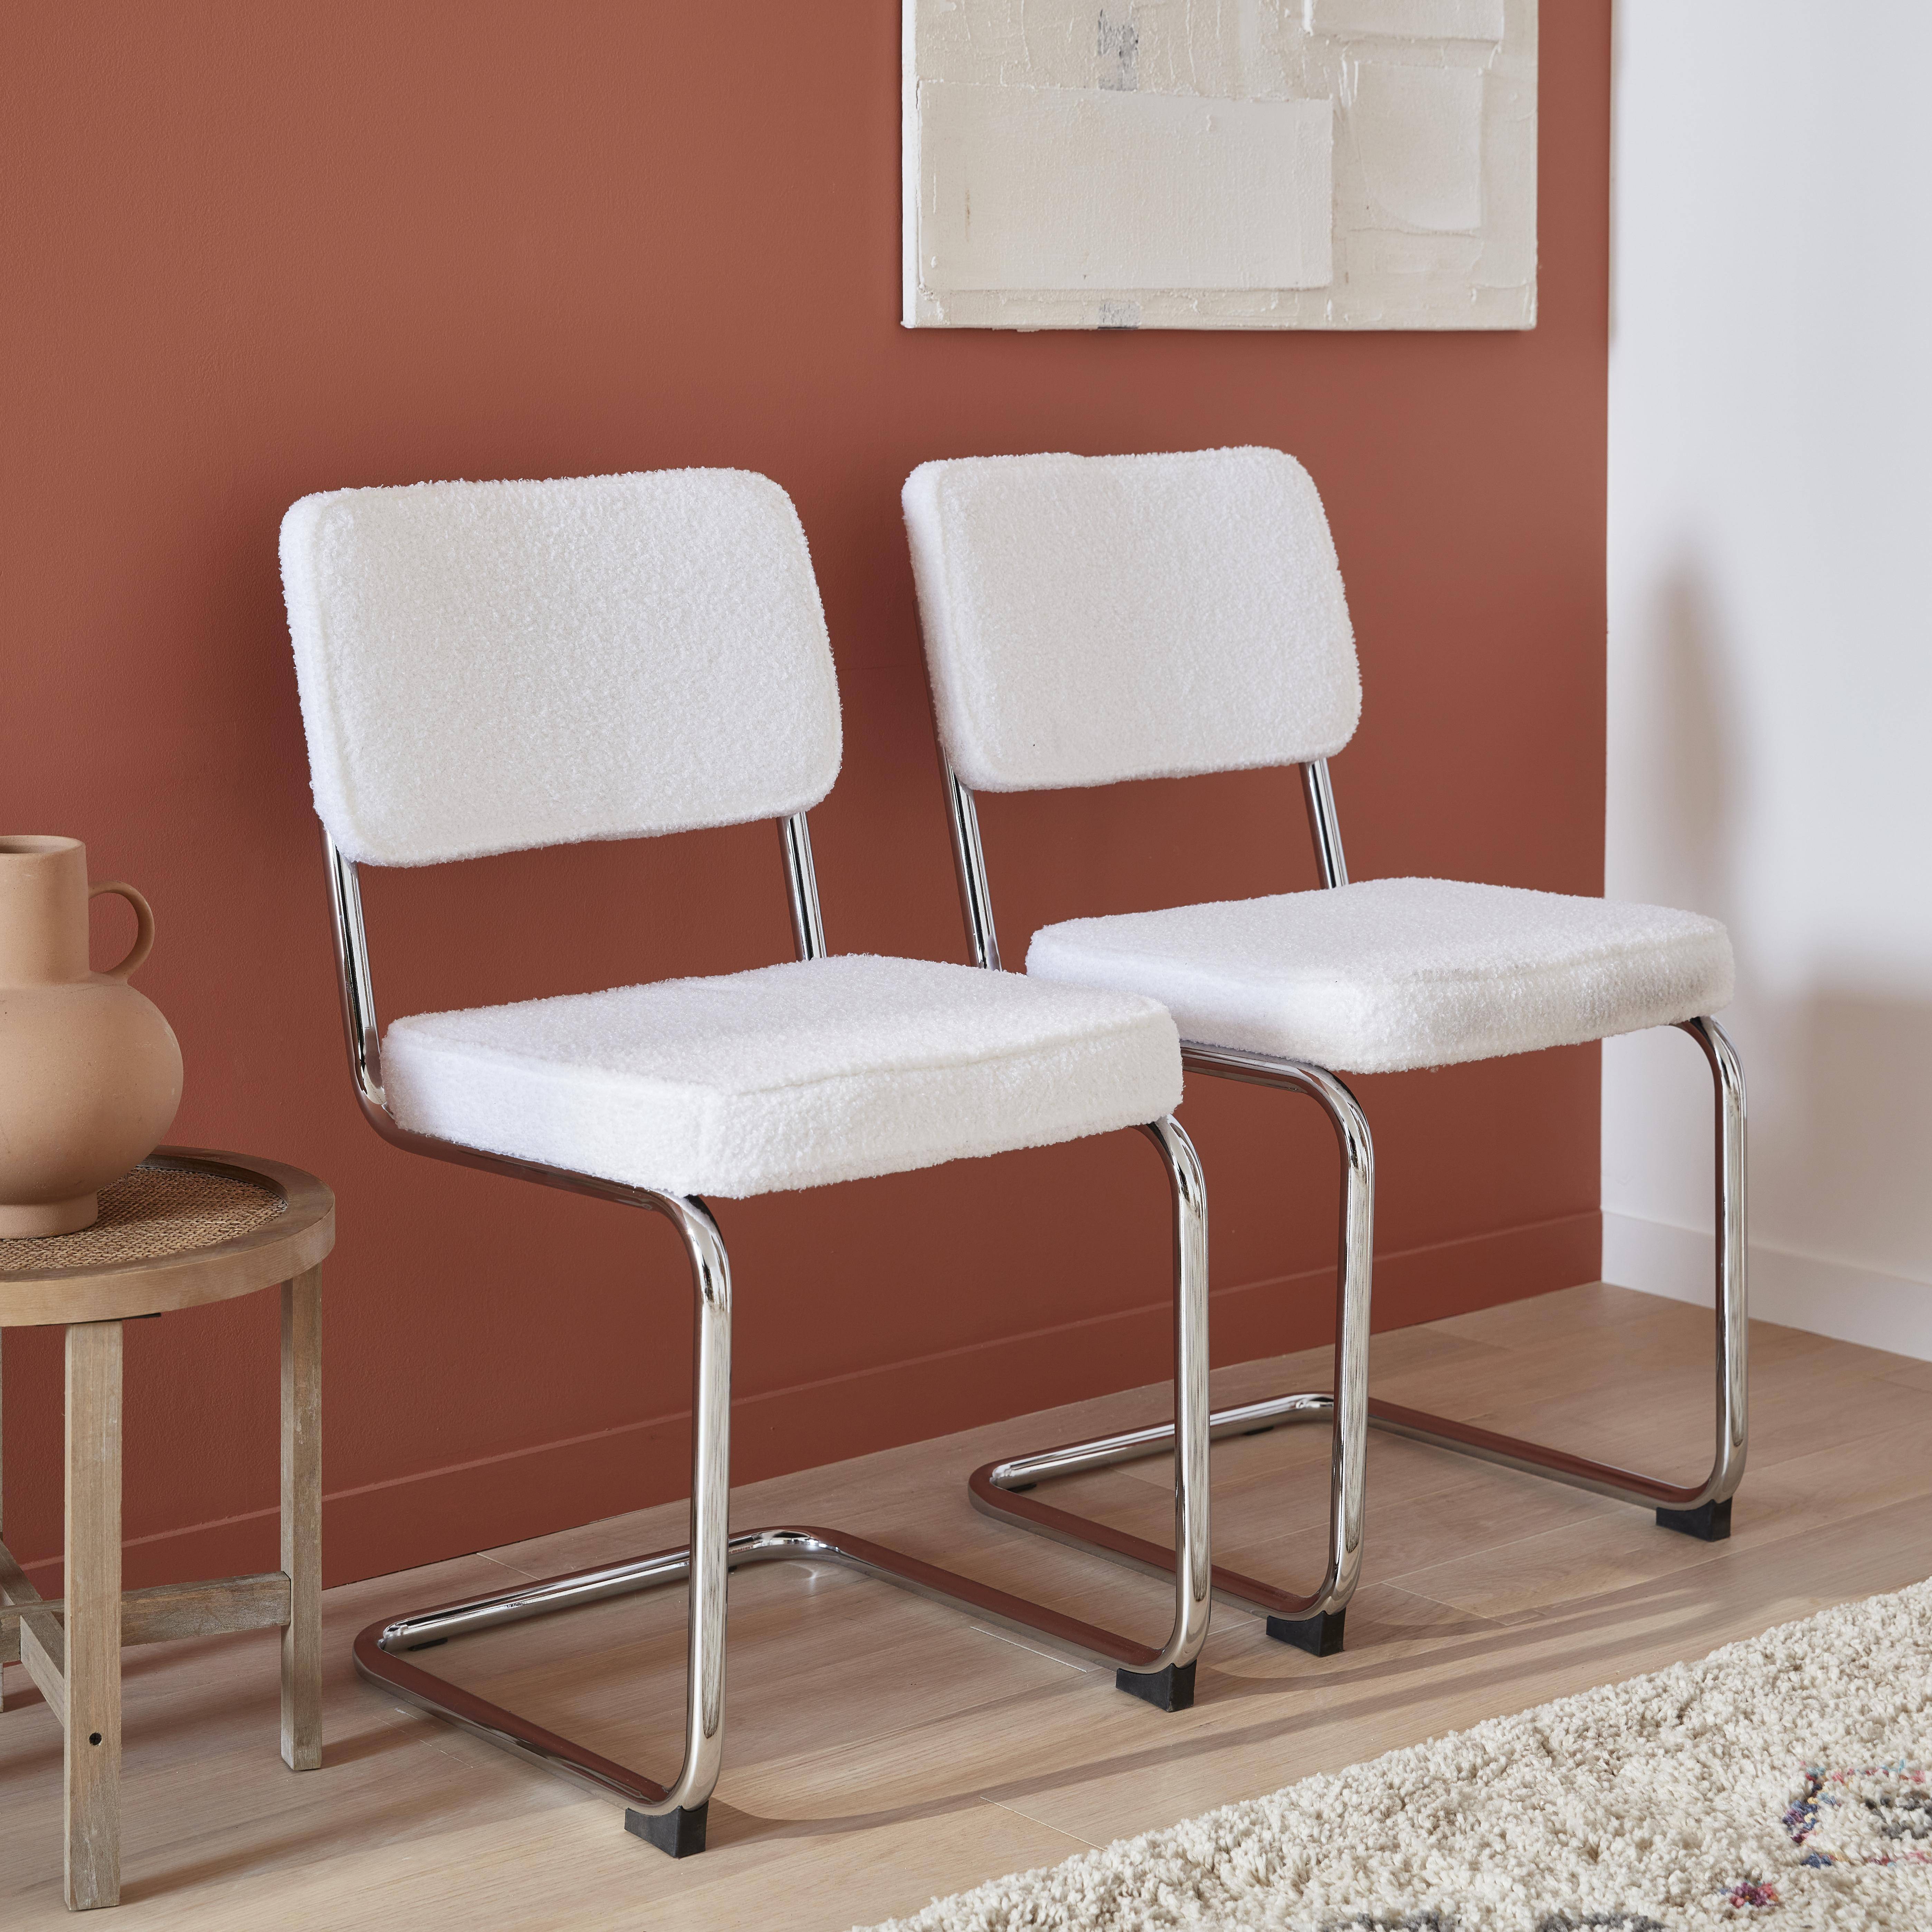 2 sillas voladizas - Maja - con rizos blancos, 46 x 54,5 x 84,5cm   Photo1